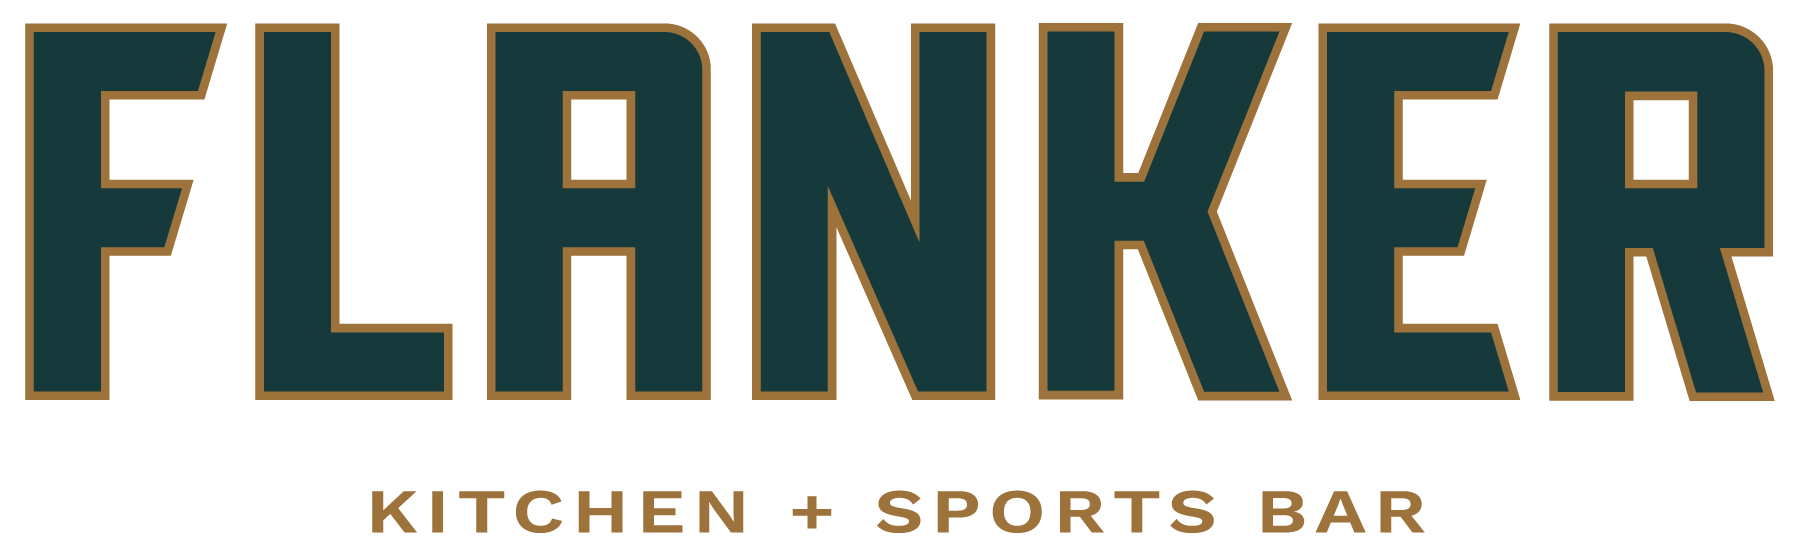 Flanker - site logo